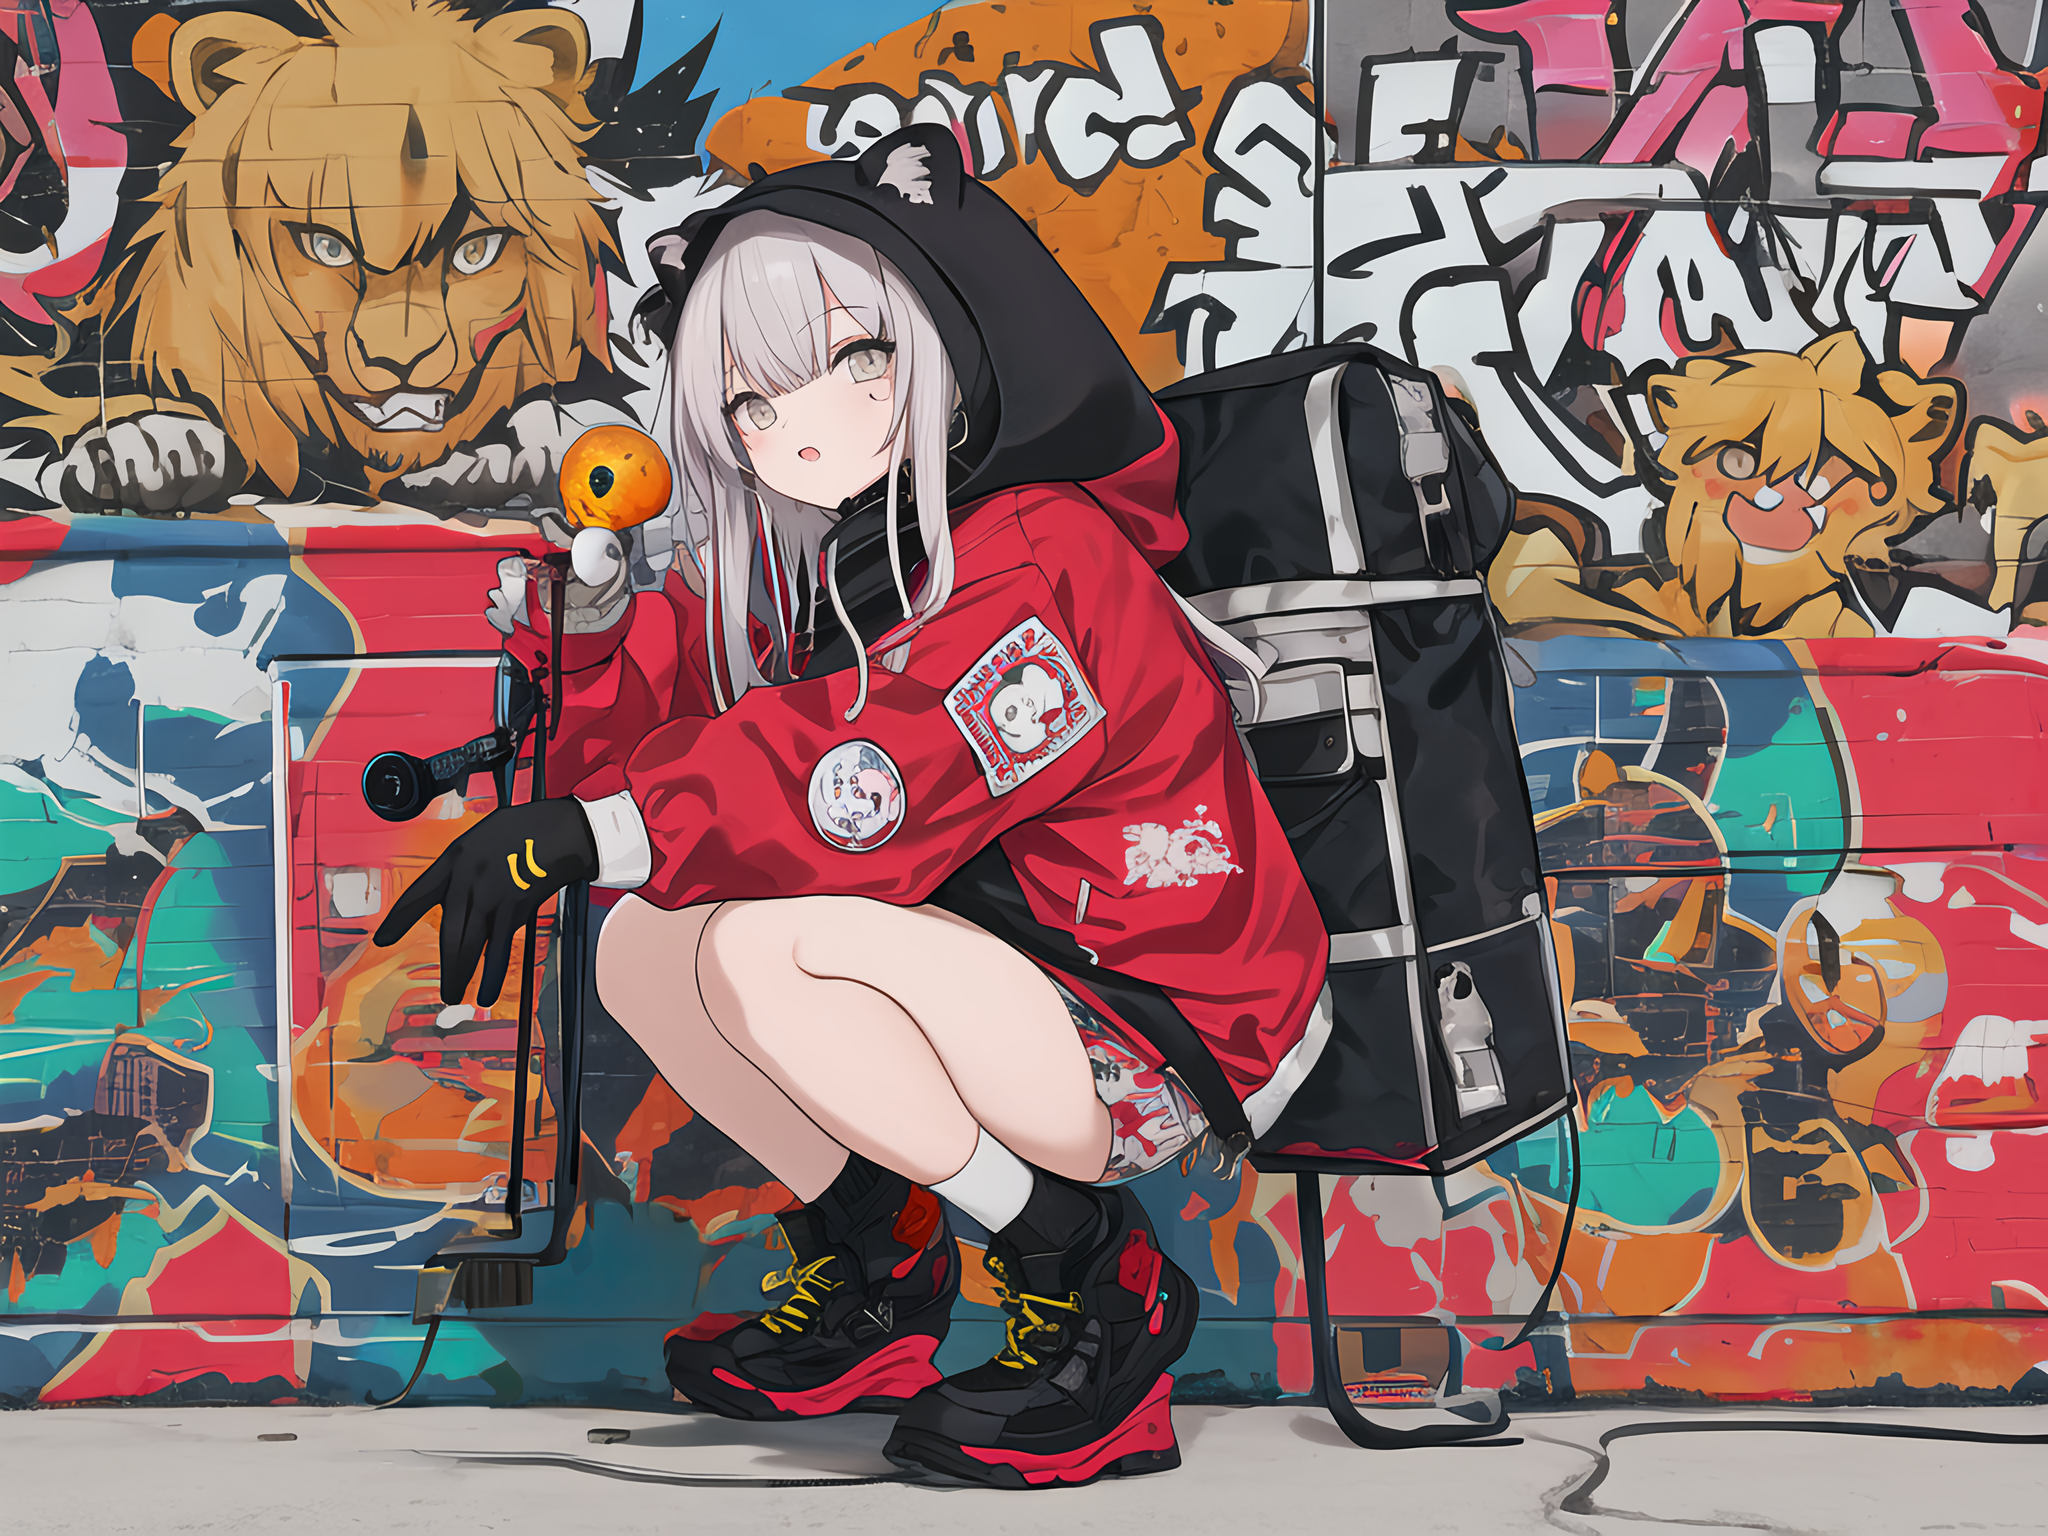 white hair, squatting, anime girls, graffiti, gloves, backpacks, shoes, AI artx1536 Wallpaper